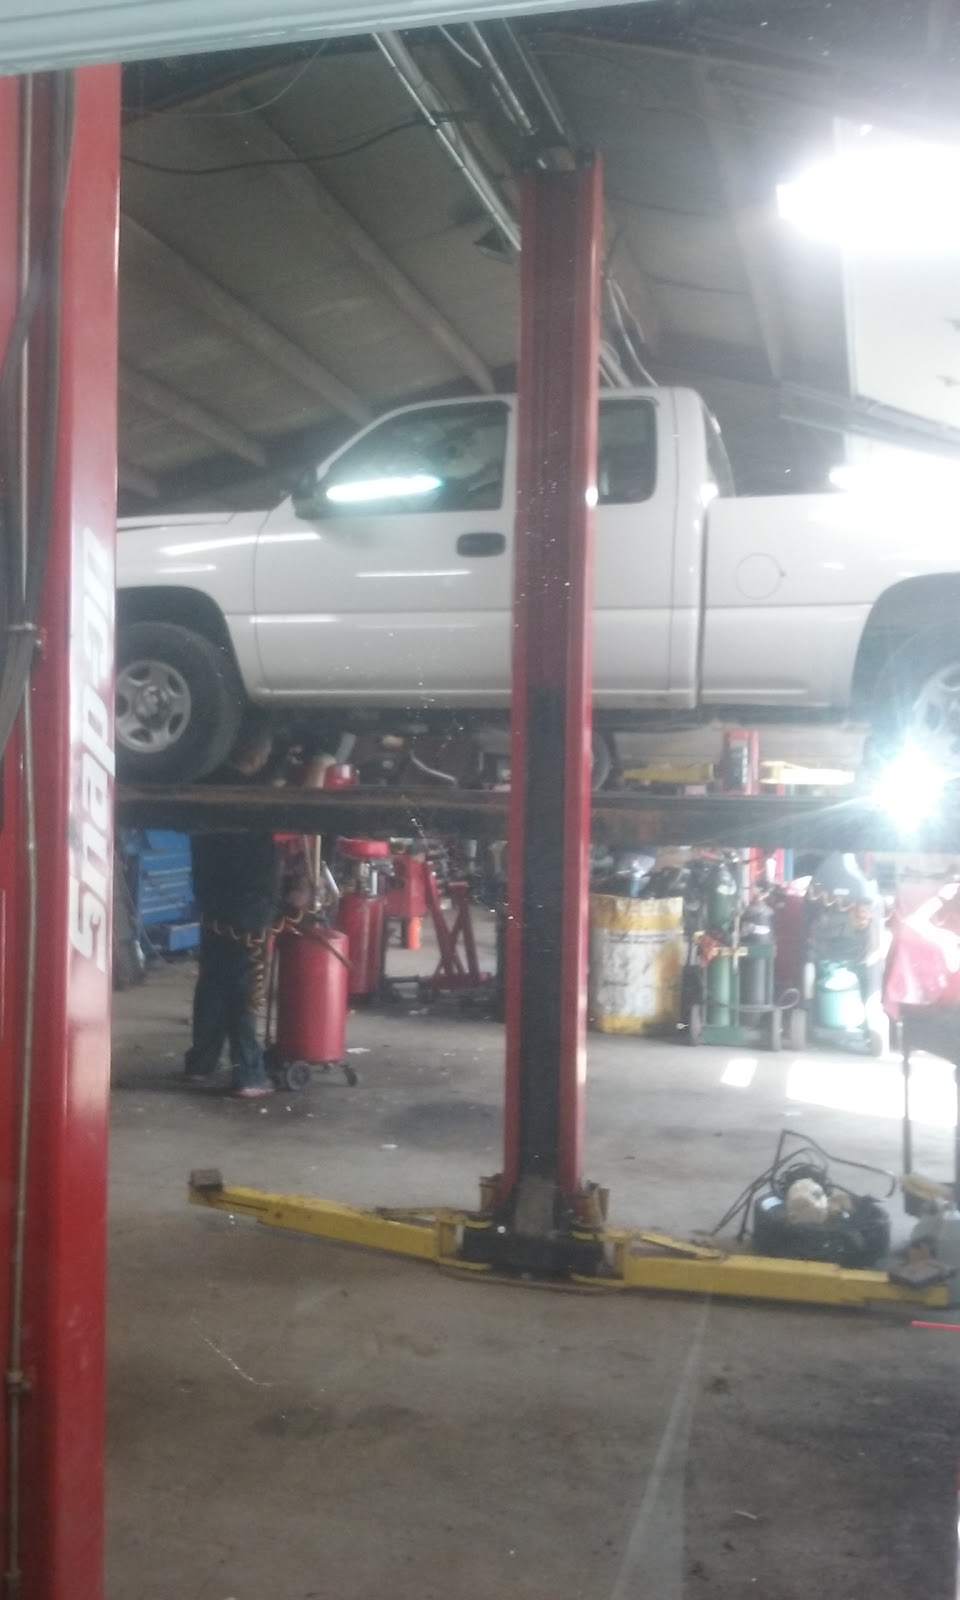 RSC Auto Repair & Tire | 50 Hall St, Ashville, OH 43103, USA | Phone: (740) 954-3702